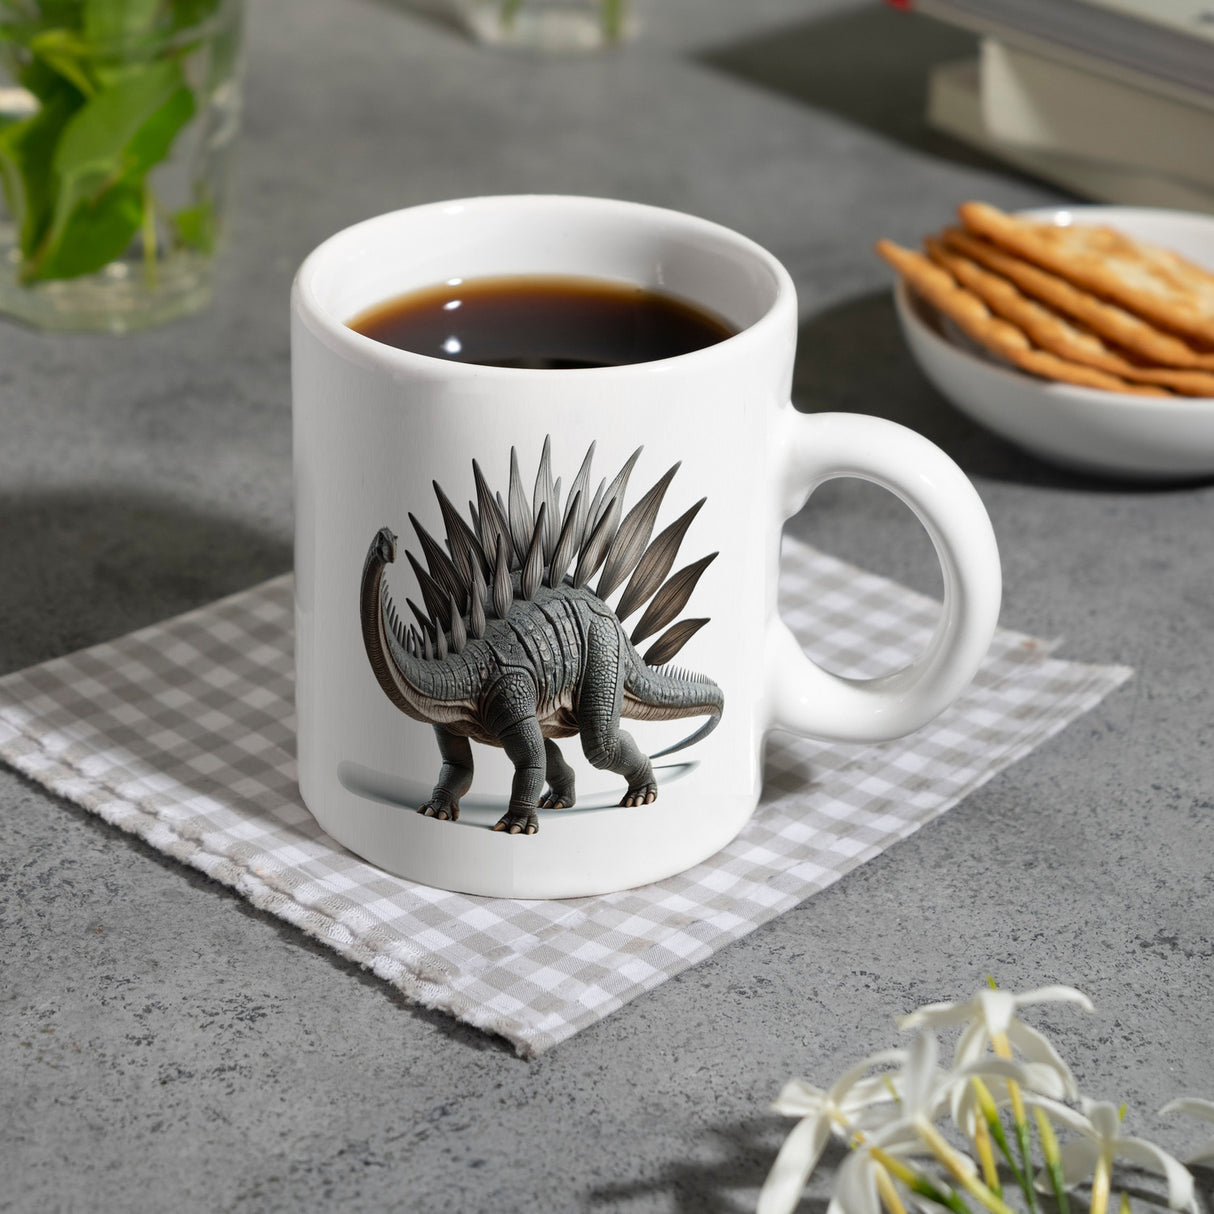 Stegosaurus Kaffeebecher